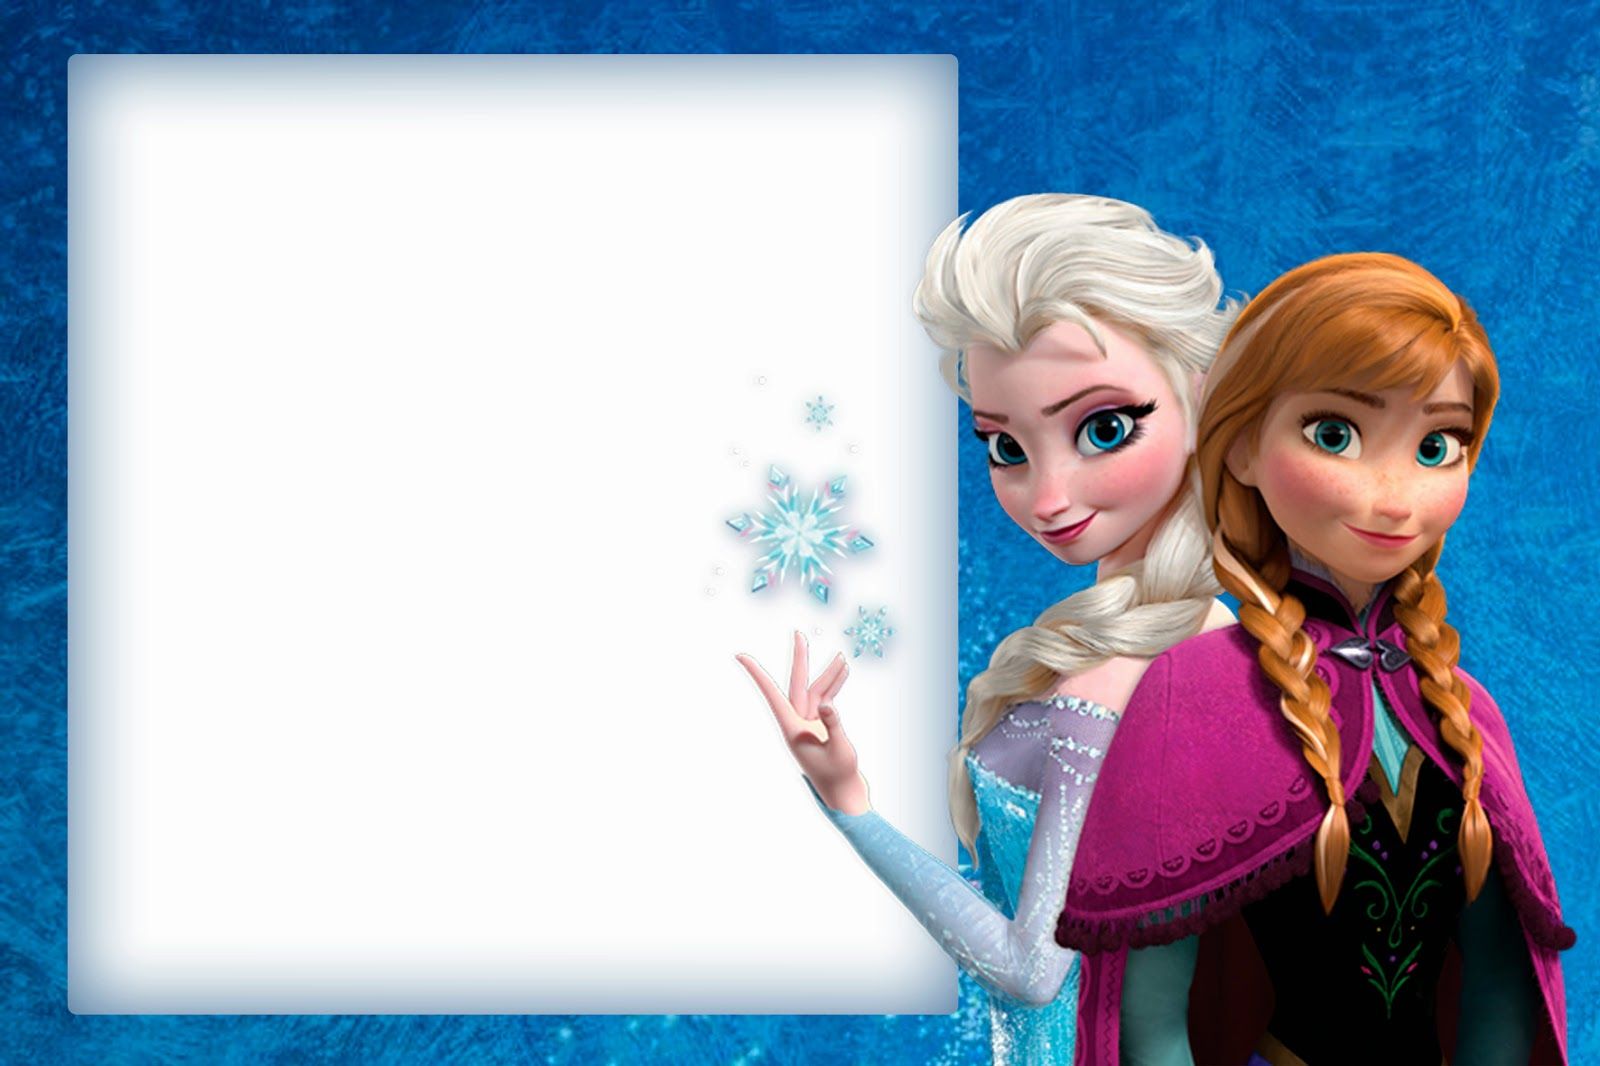 Convite Frozen: 50 Modelos Lindos Para Uma Aventura Congelante